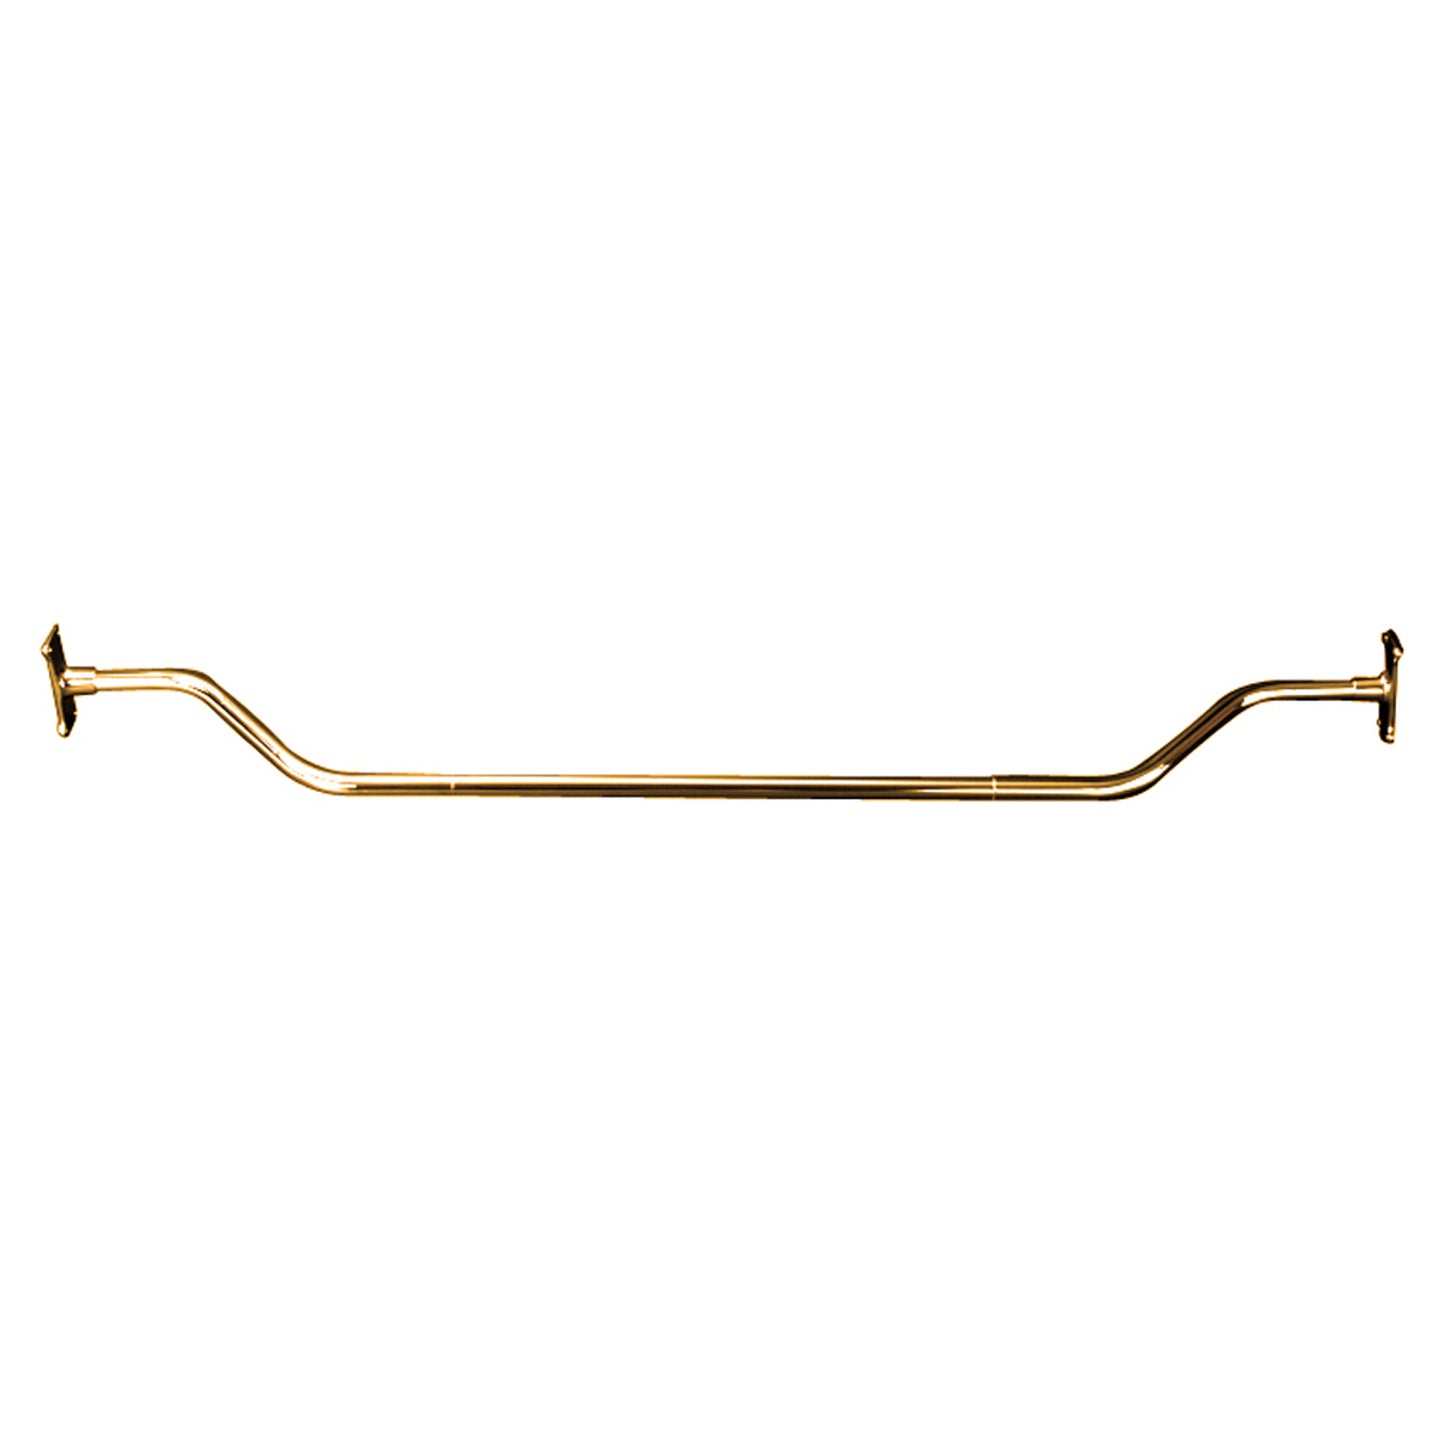 4120 Cellini Shower Enlarger Rod, 72" w/Flanges in Polished Brass